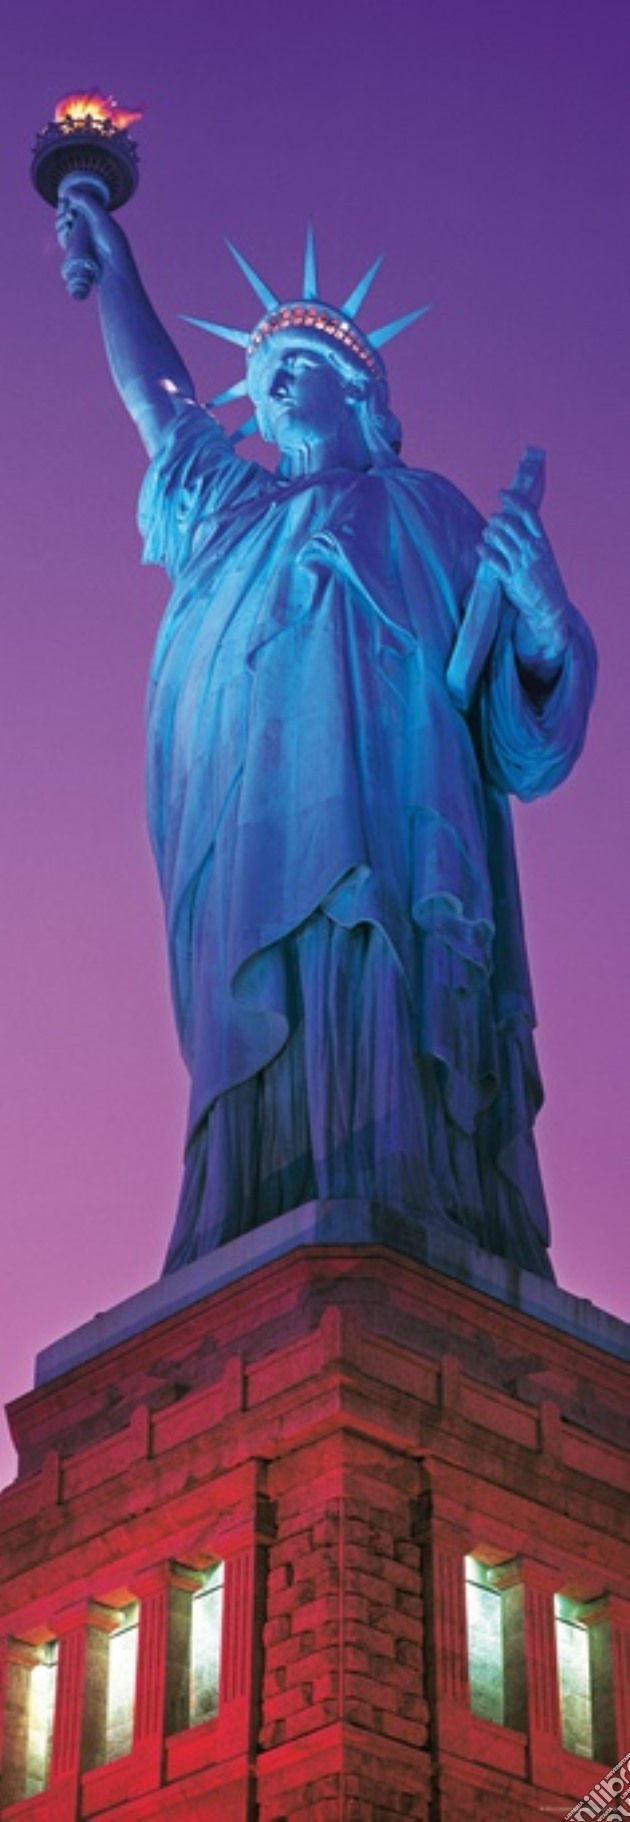 VPz1000 Sights Statue of Liberty puzzle di Alexander von Humboldt